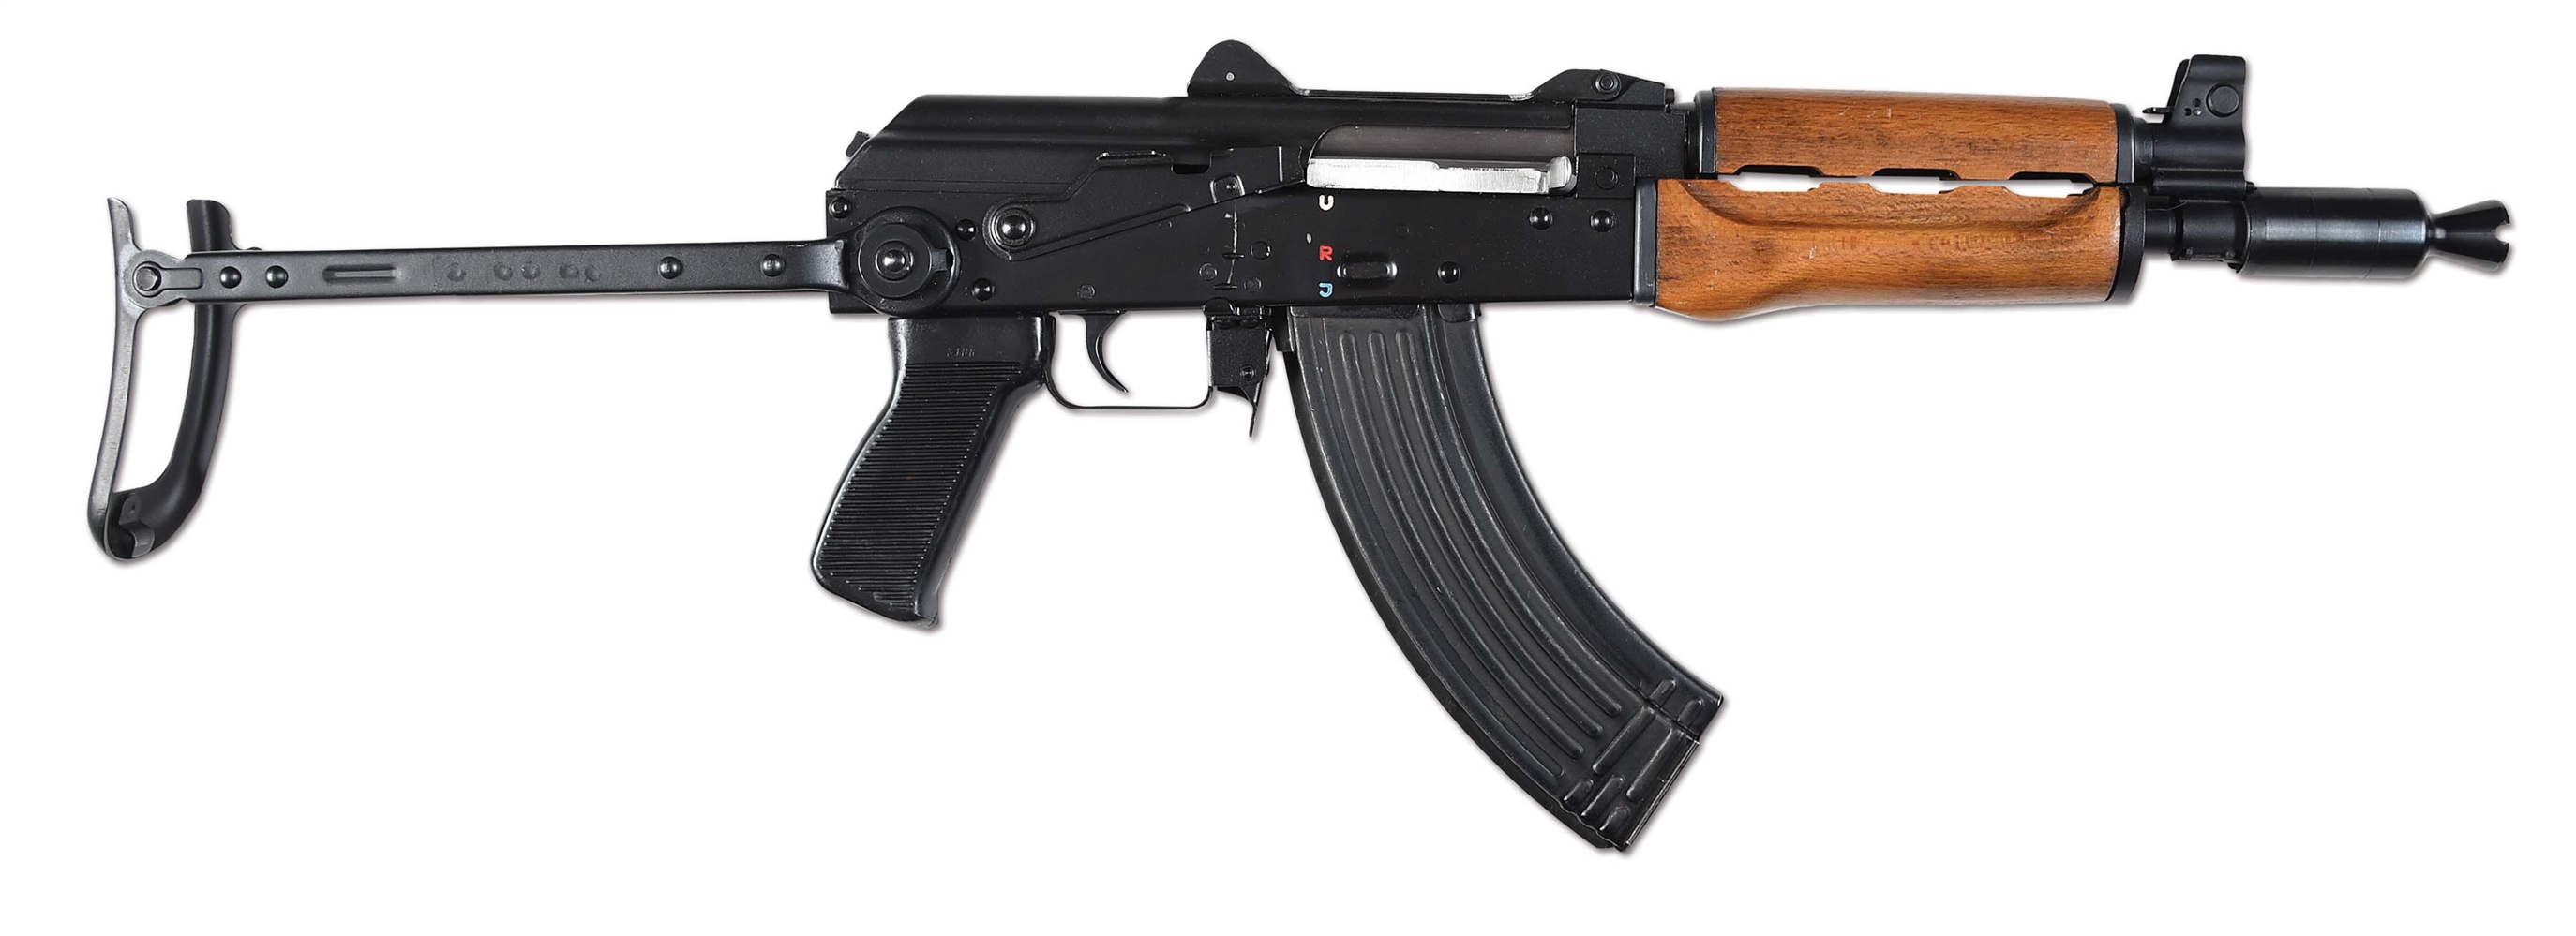 (N) LAFRANCE SPECIALTIES REGISTERED RECEIVER YUGOSLAVIAN M92 (AK 74U) MACHINE GUN (FULLY TRANSFERABLE).